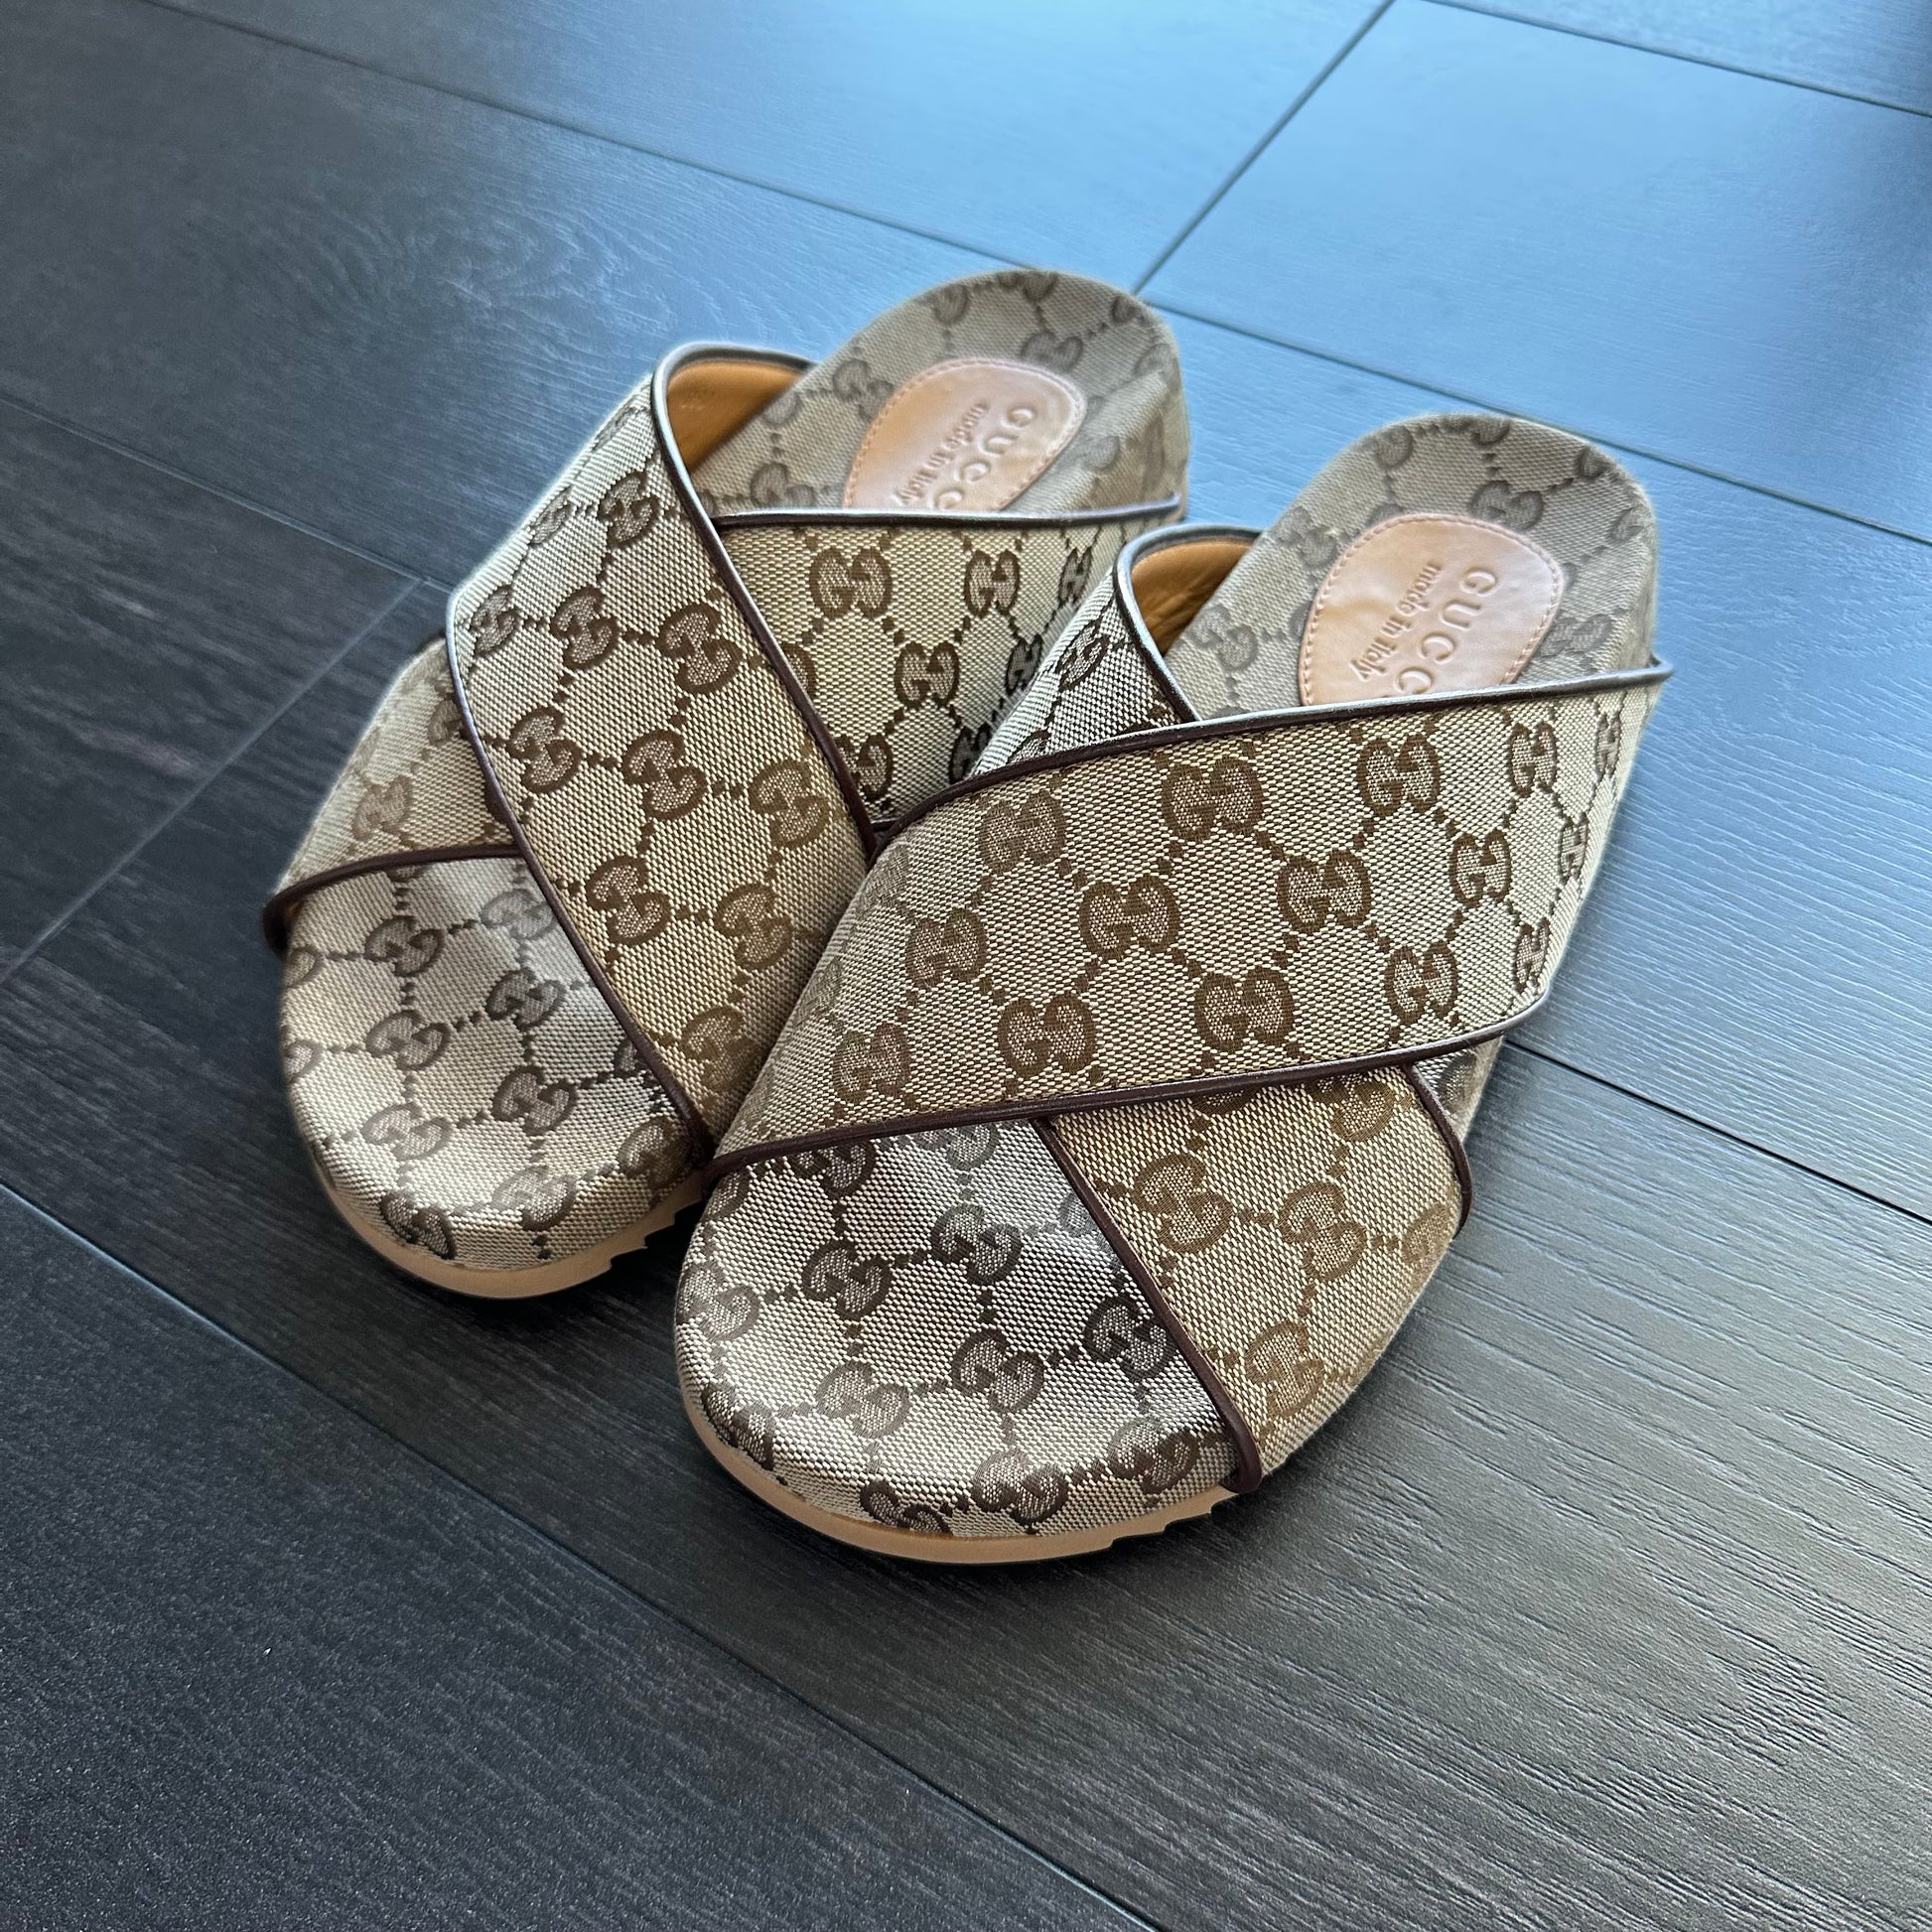 Gucci GG Monogram Flip Flop Sandals Size 9.5